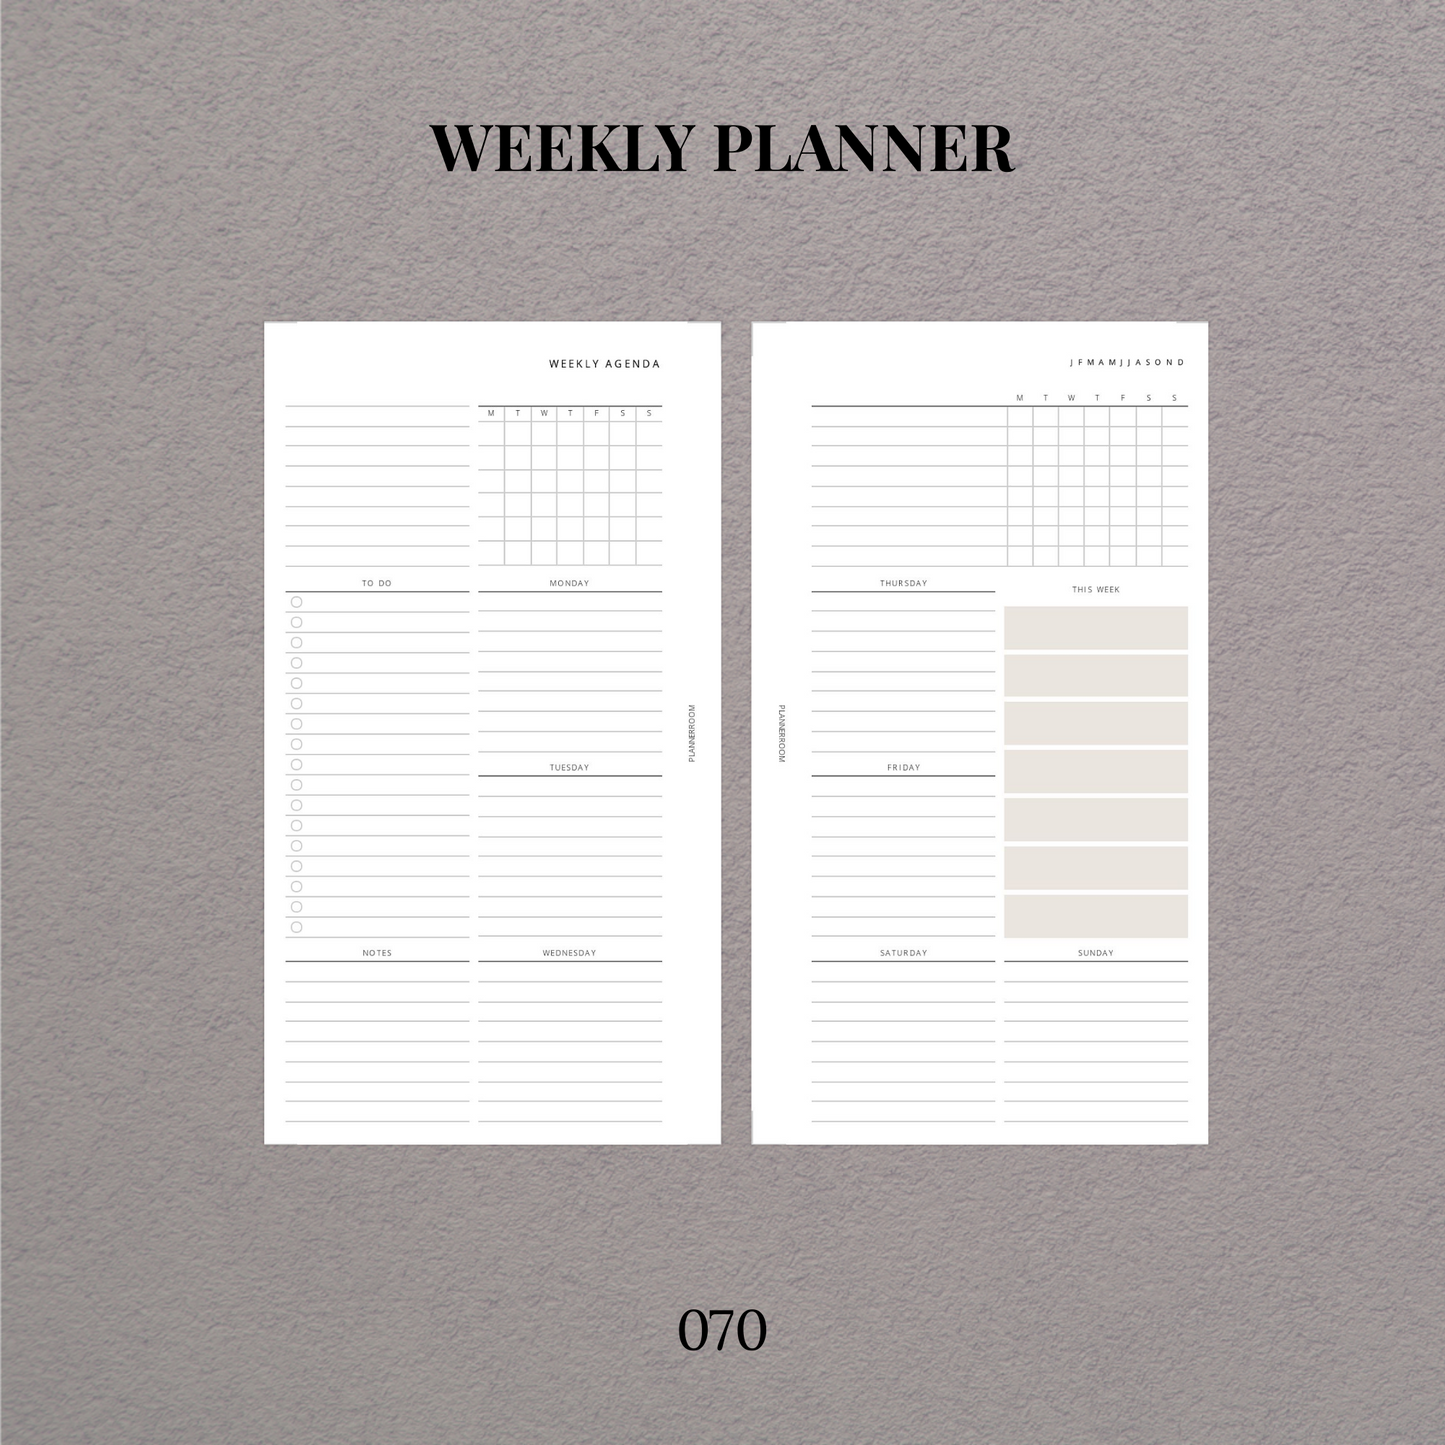 Weekly planner | Printable inserts - 070